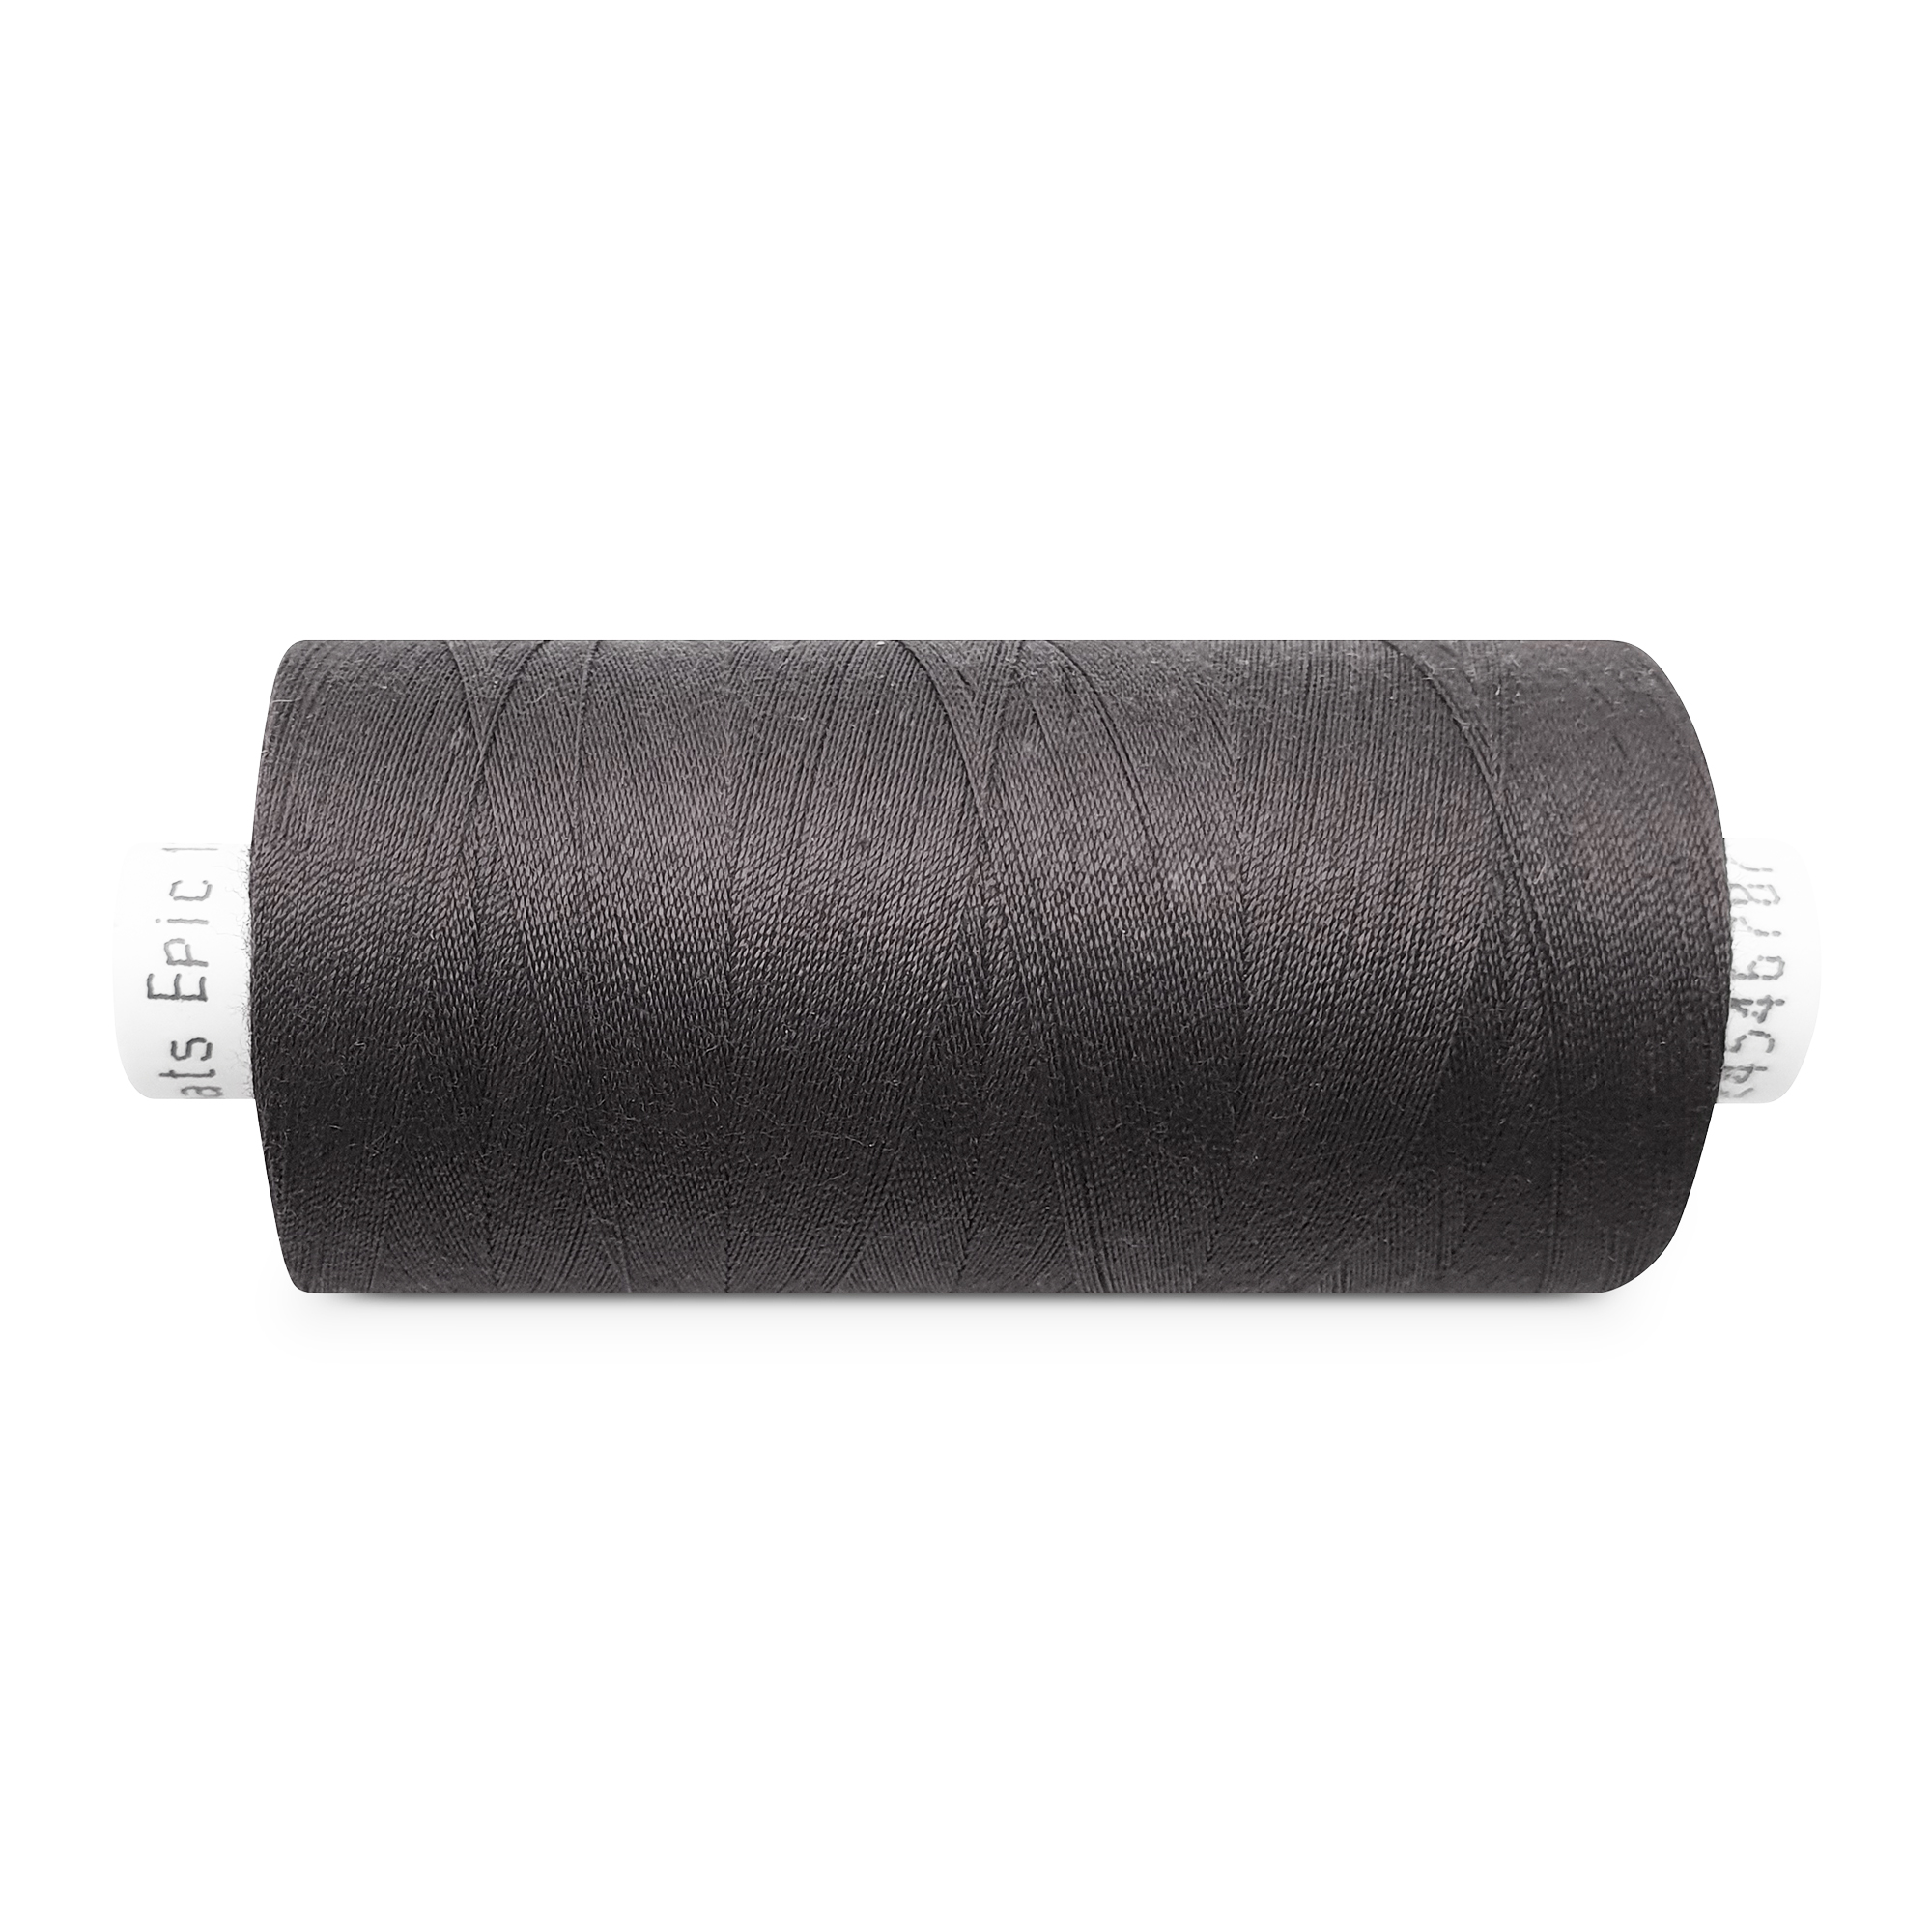 Jeans/Sewing thread dark brown grey